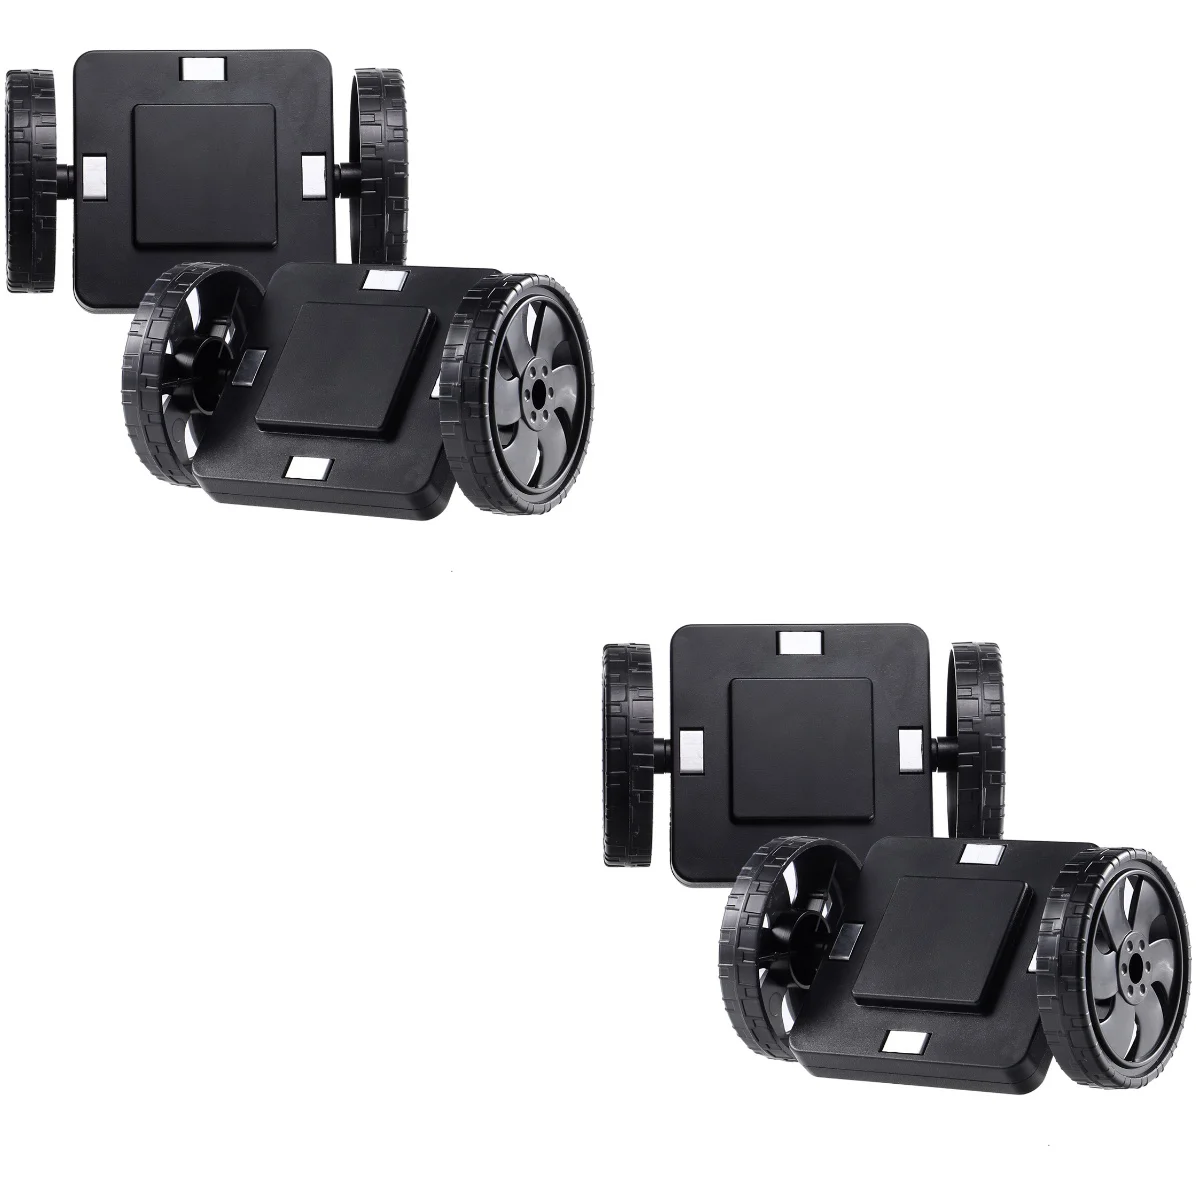 

4 pcs Intelligent Magnetic Wheels Construction Base Wheels for Kids Children Toddlers Preschool Gift Toys ( Black )